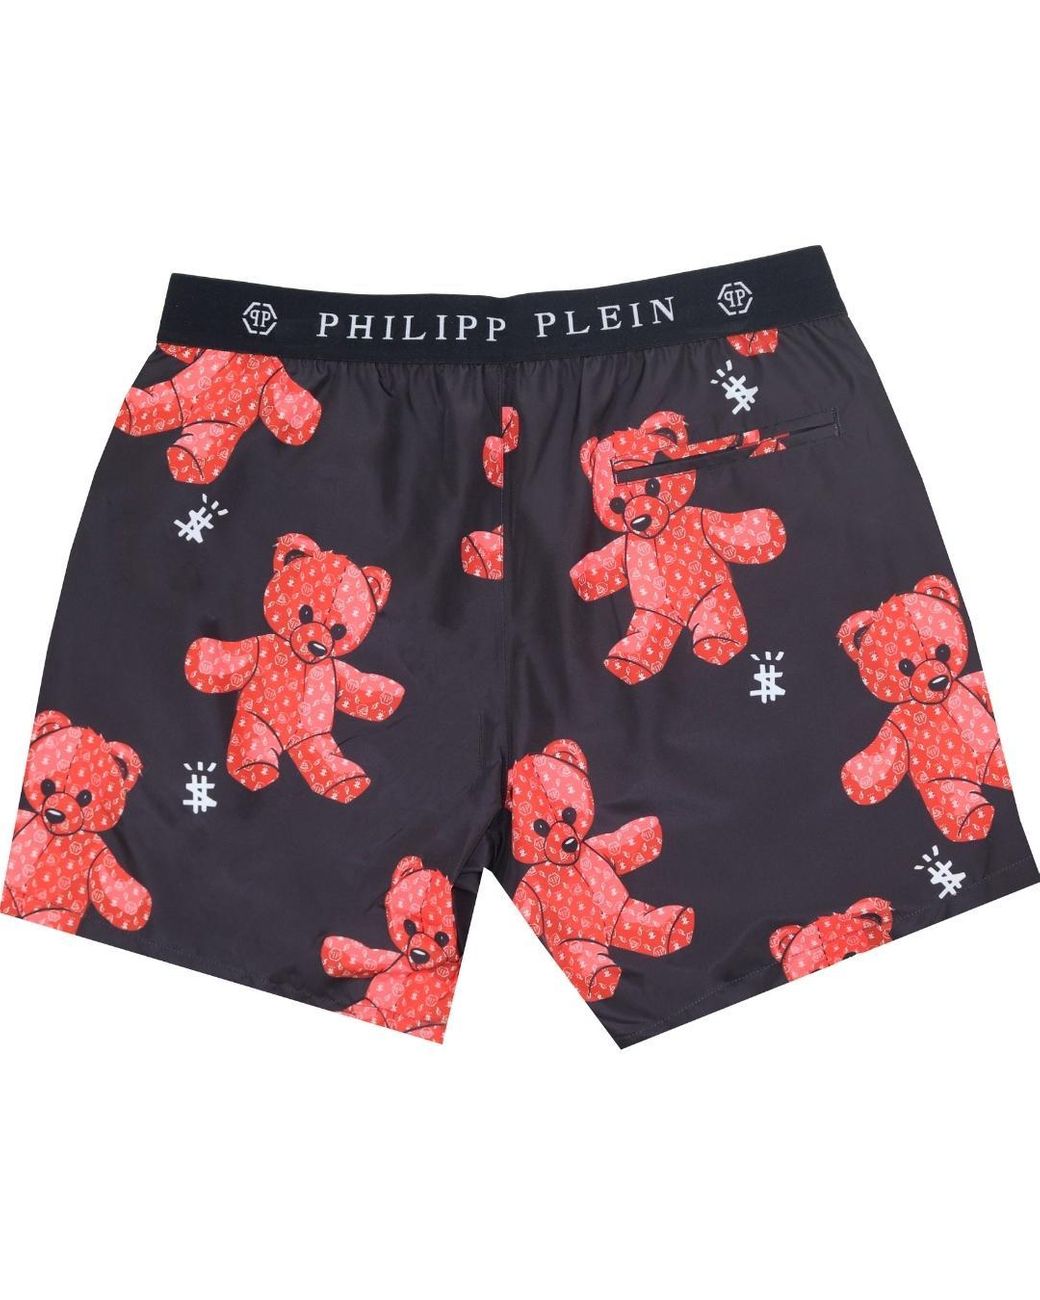 premier Goodwill zak Philipp Plein Cupp03 M0199 Black Swim Shorts for Men | Lyst